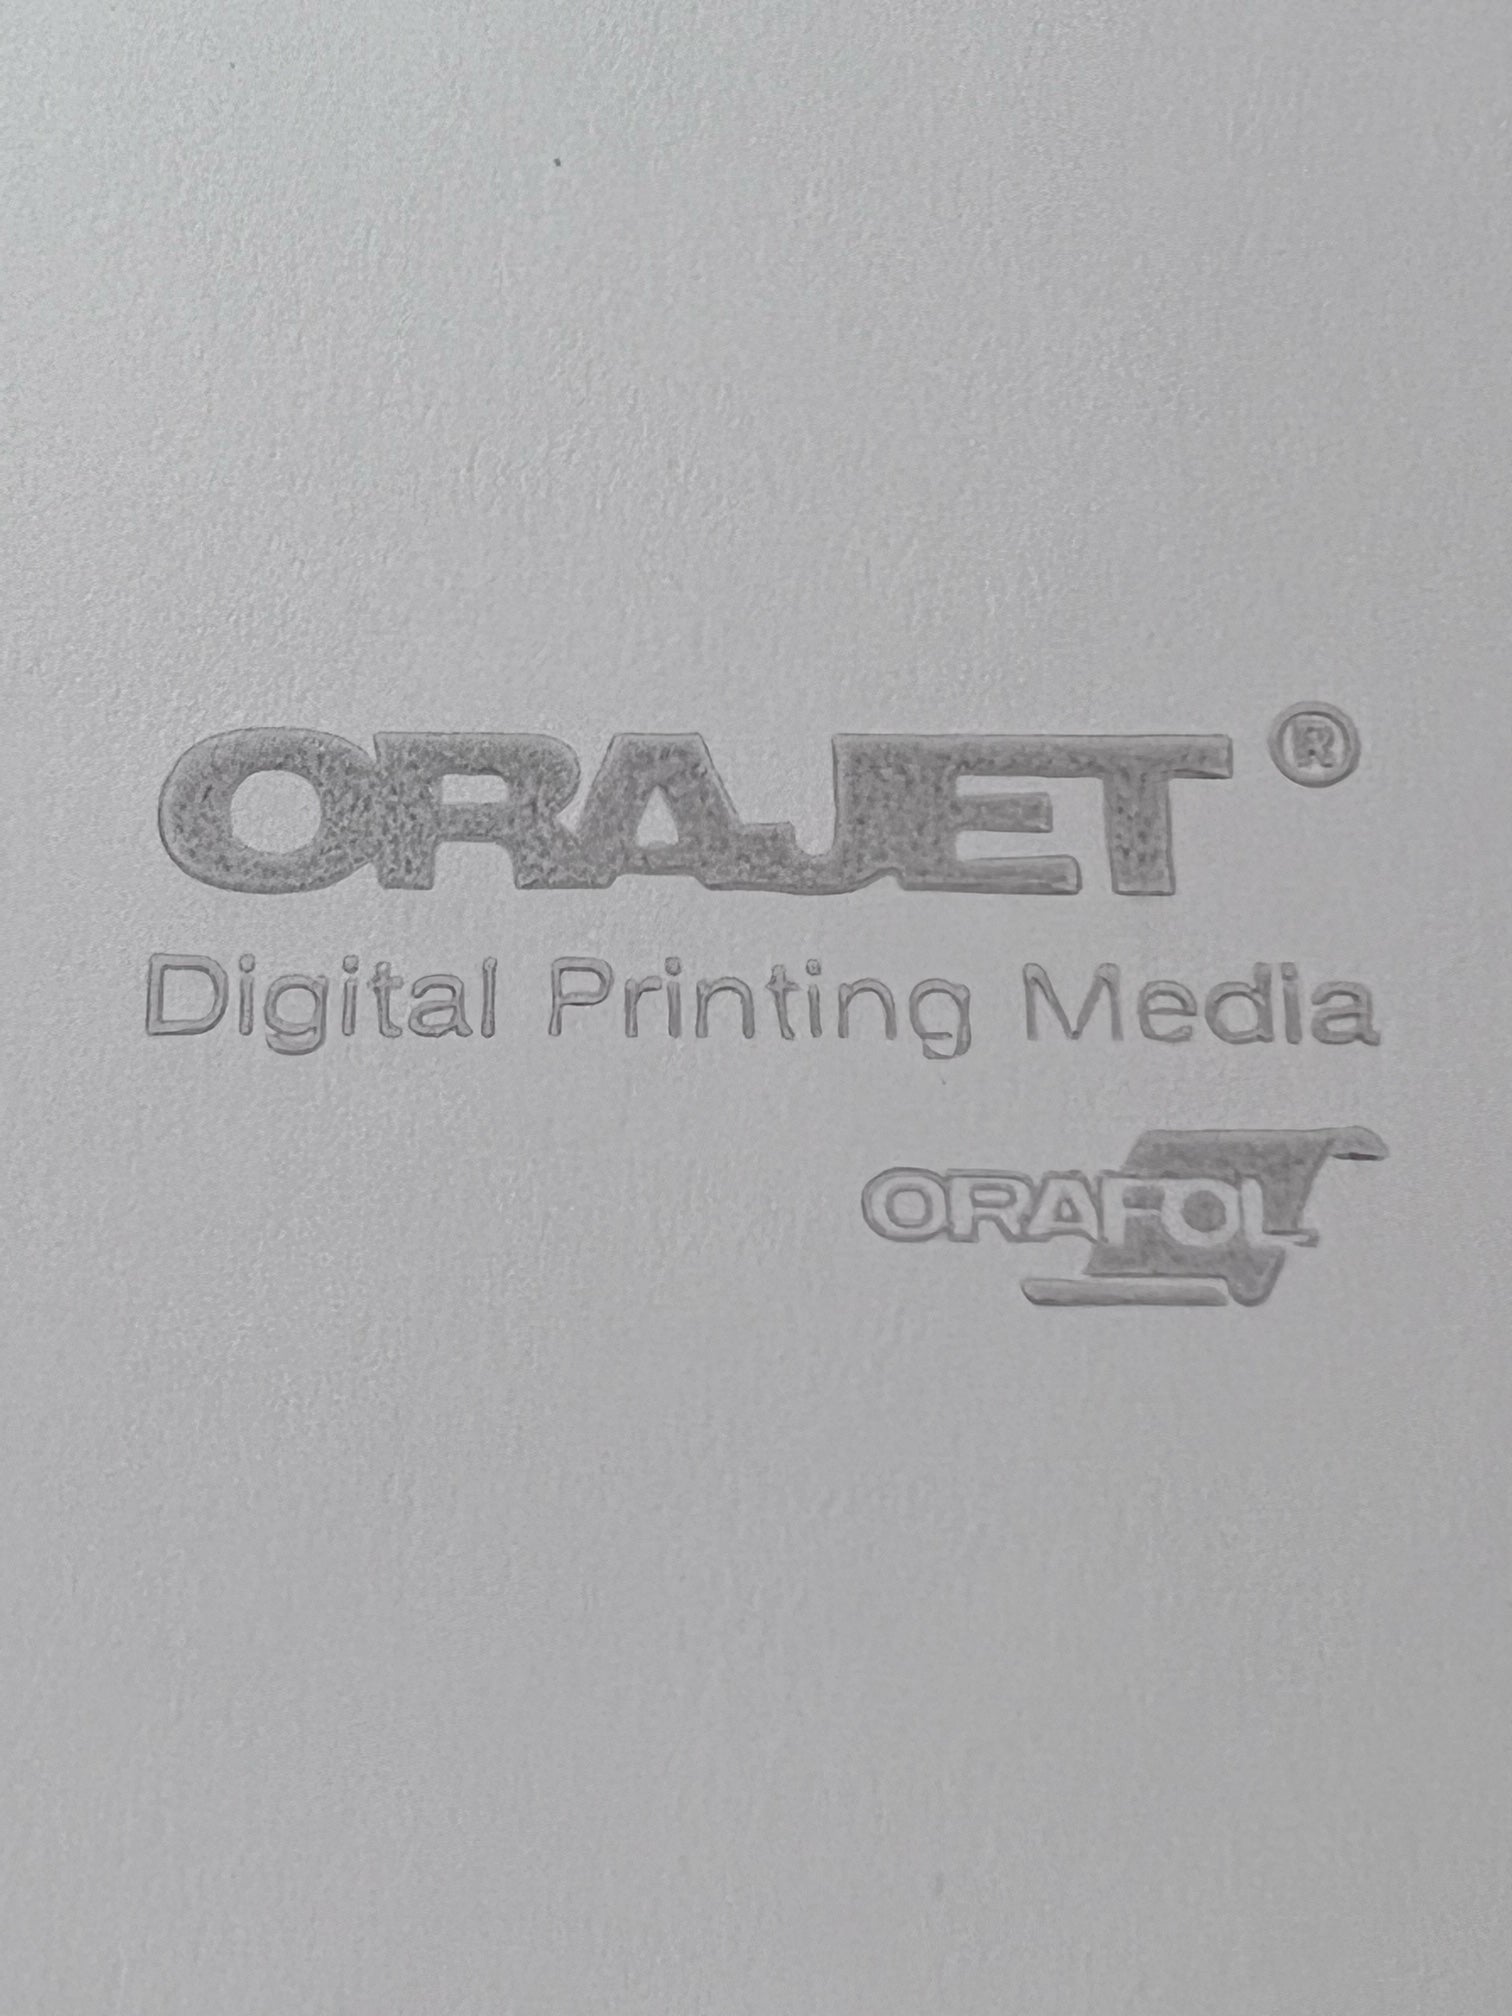 Printable Vinyl - Orajet